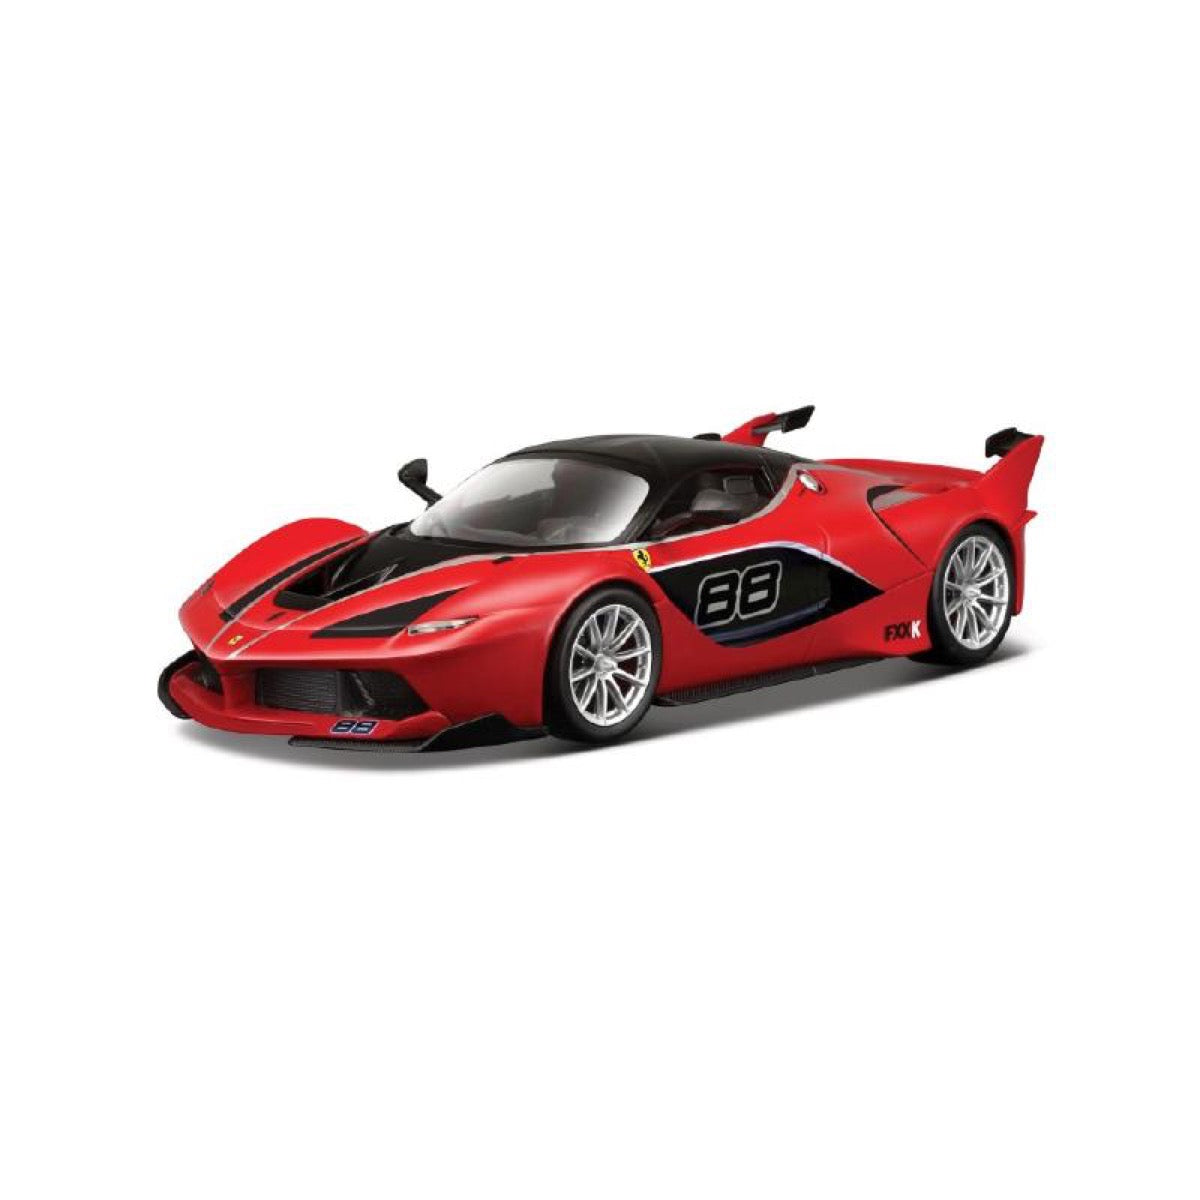 390689.004 - Bburago Ferrari FXX K  SIGNATURE  - 1:18 nera (#44) rossa